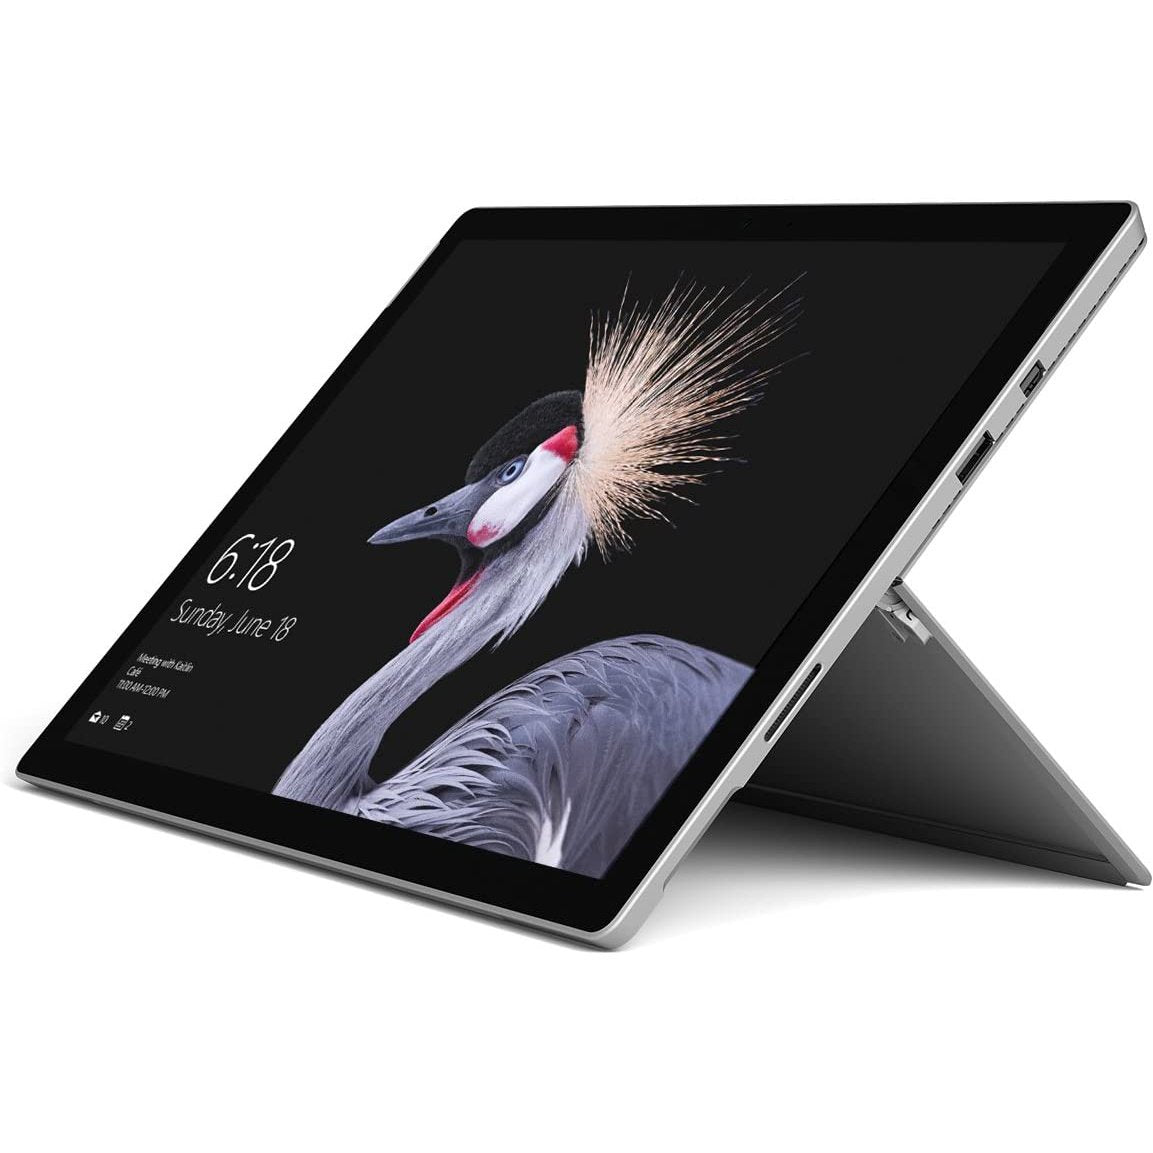 Surface Pro 5 2017 (Intel Core i5 - 8GB RAM - 256GB - Intel HD Graphics 620 - Platinum - LTE - Consumer)